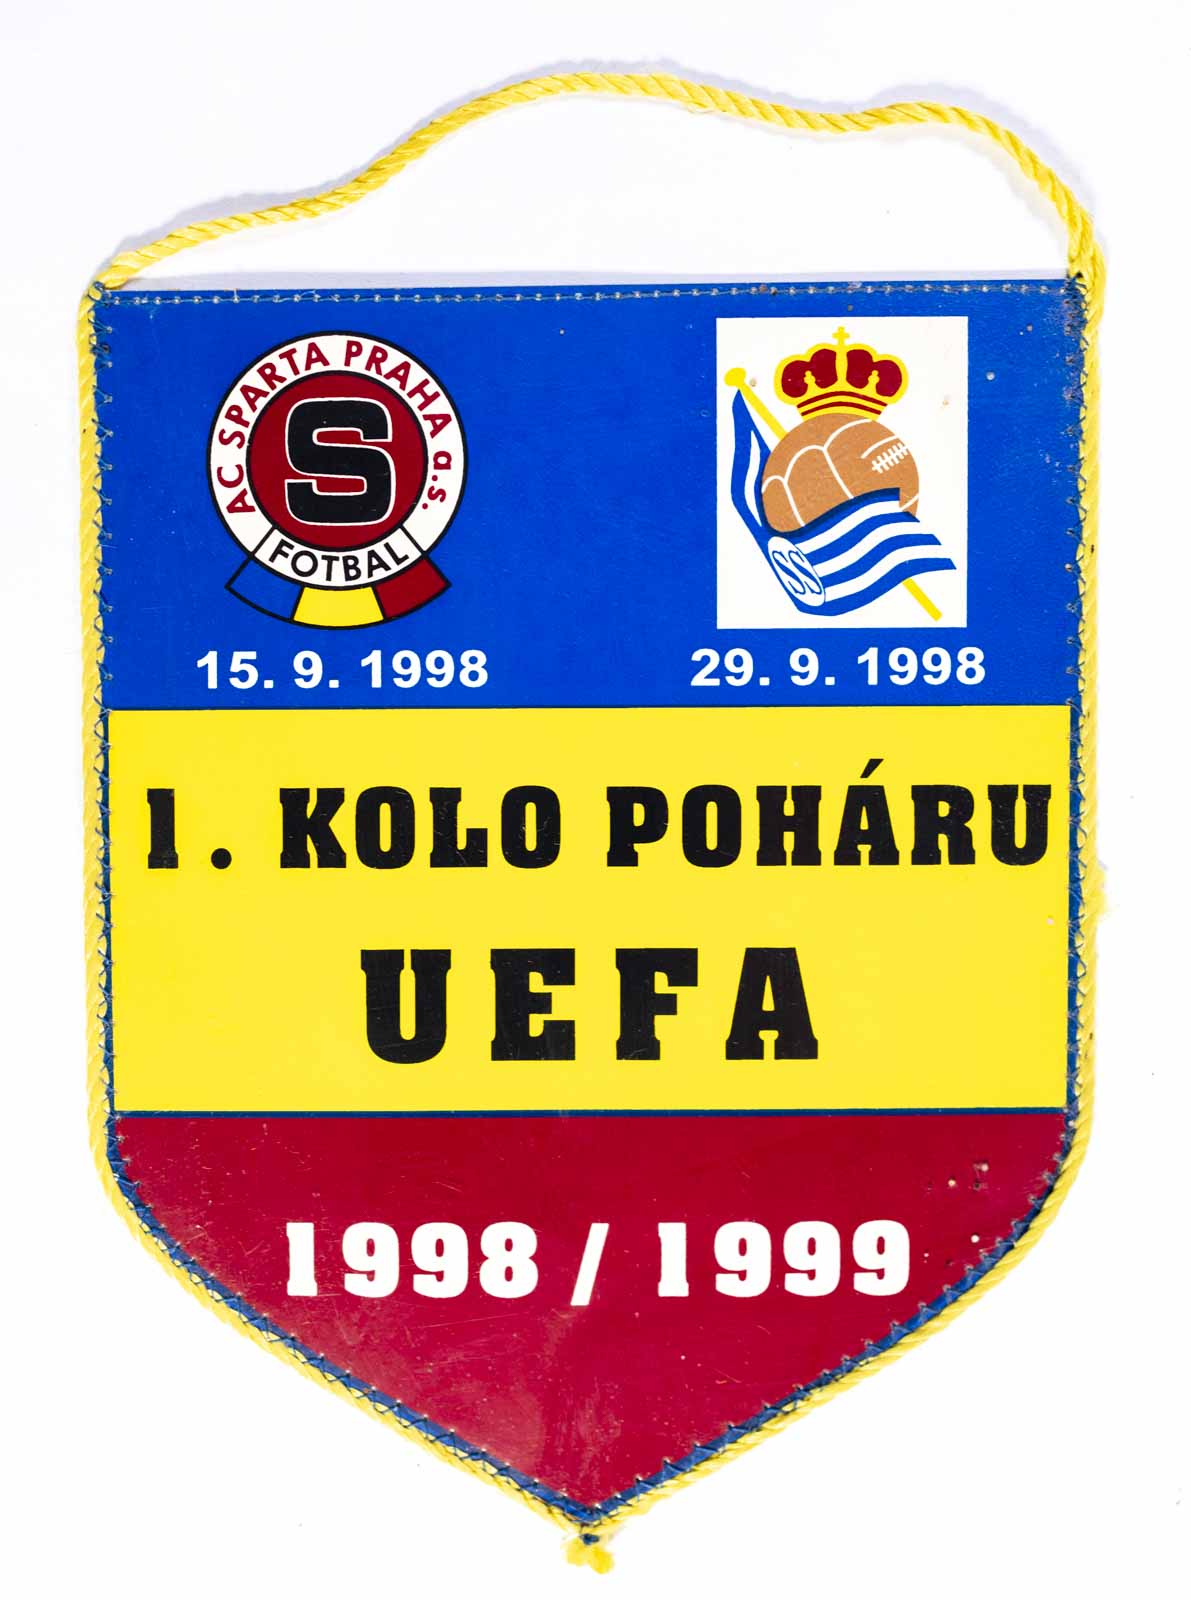 Klubová vlajka, Sparta Praha, 1. kolo poháru UEFA, 1998/1999